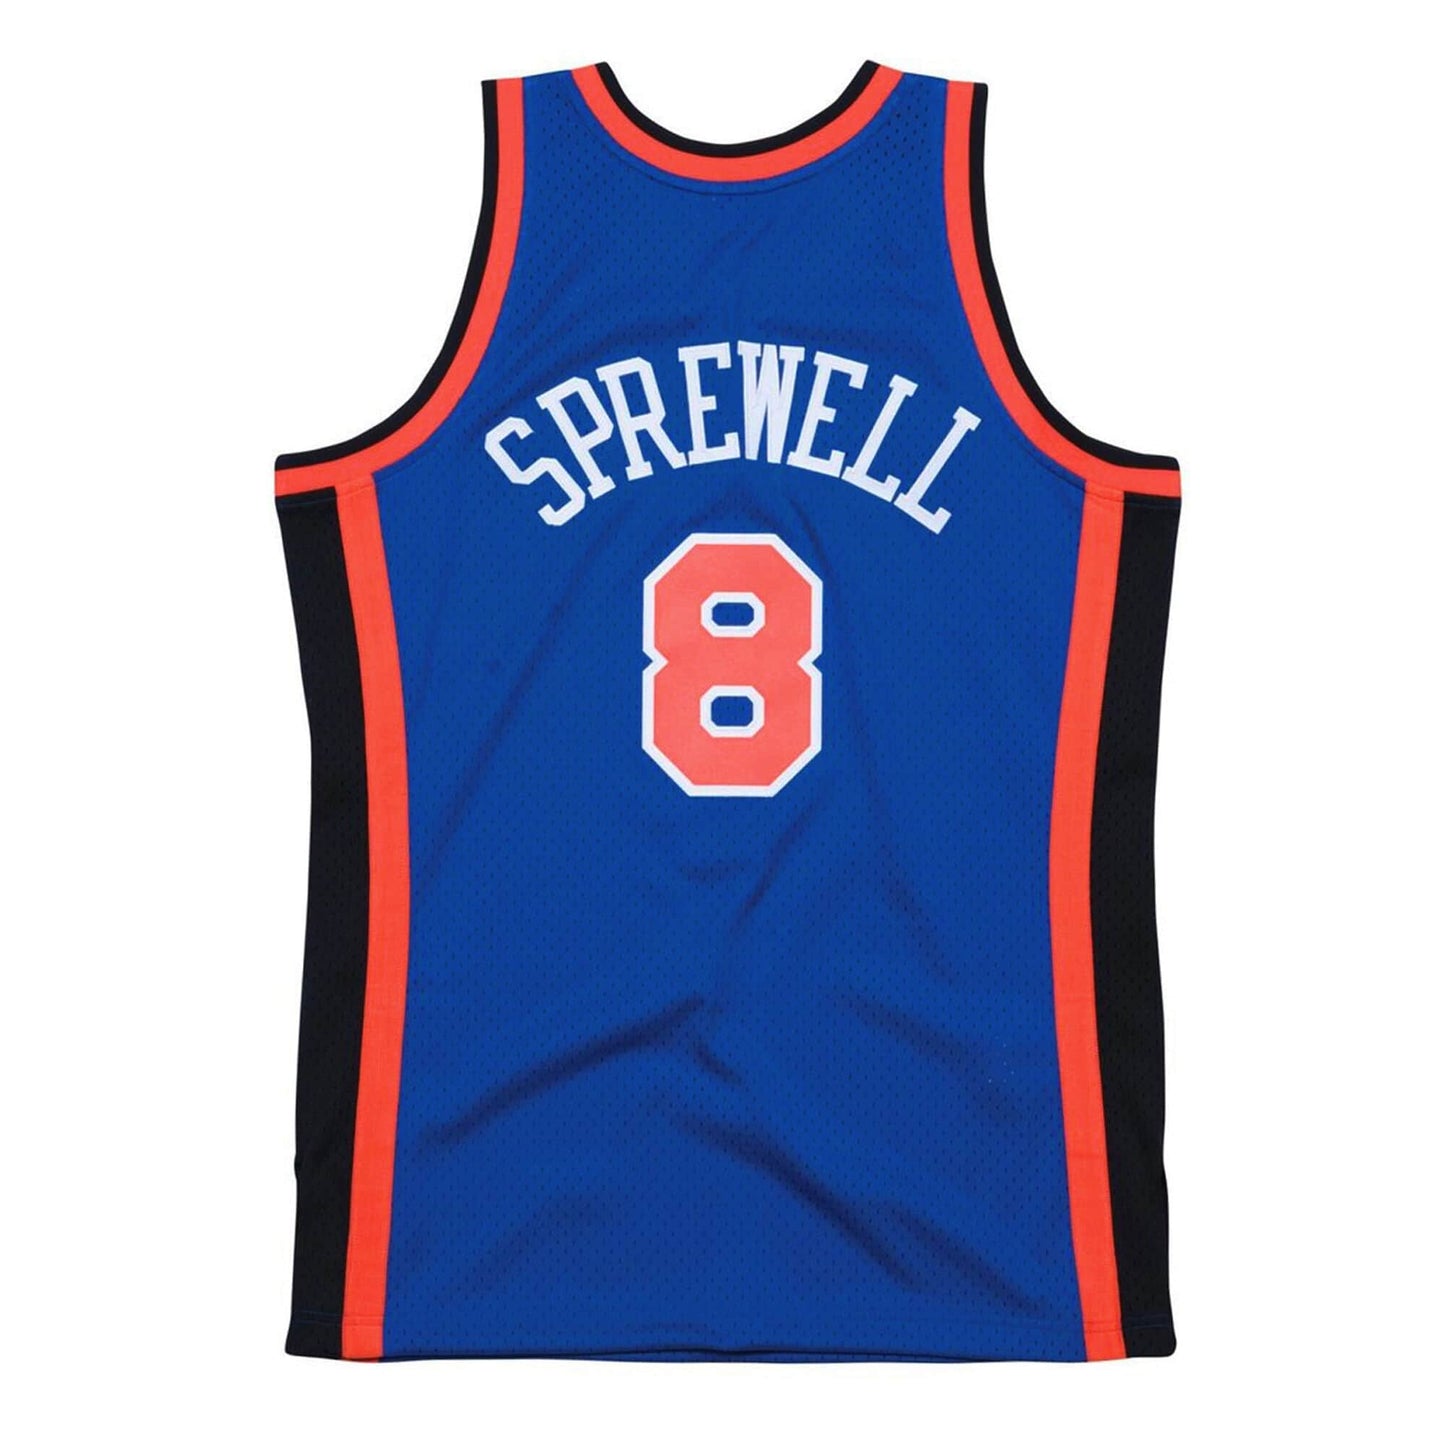 Mitchell & Ness 1998-99 New York Knicks Latrell Sprewell Authentic Jersey